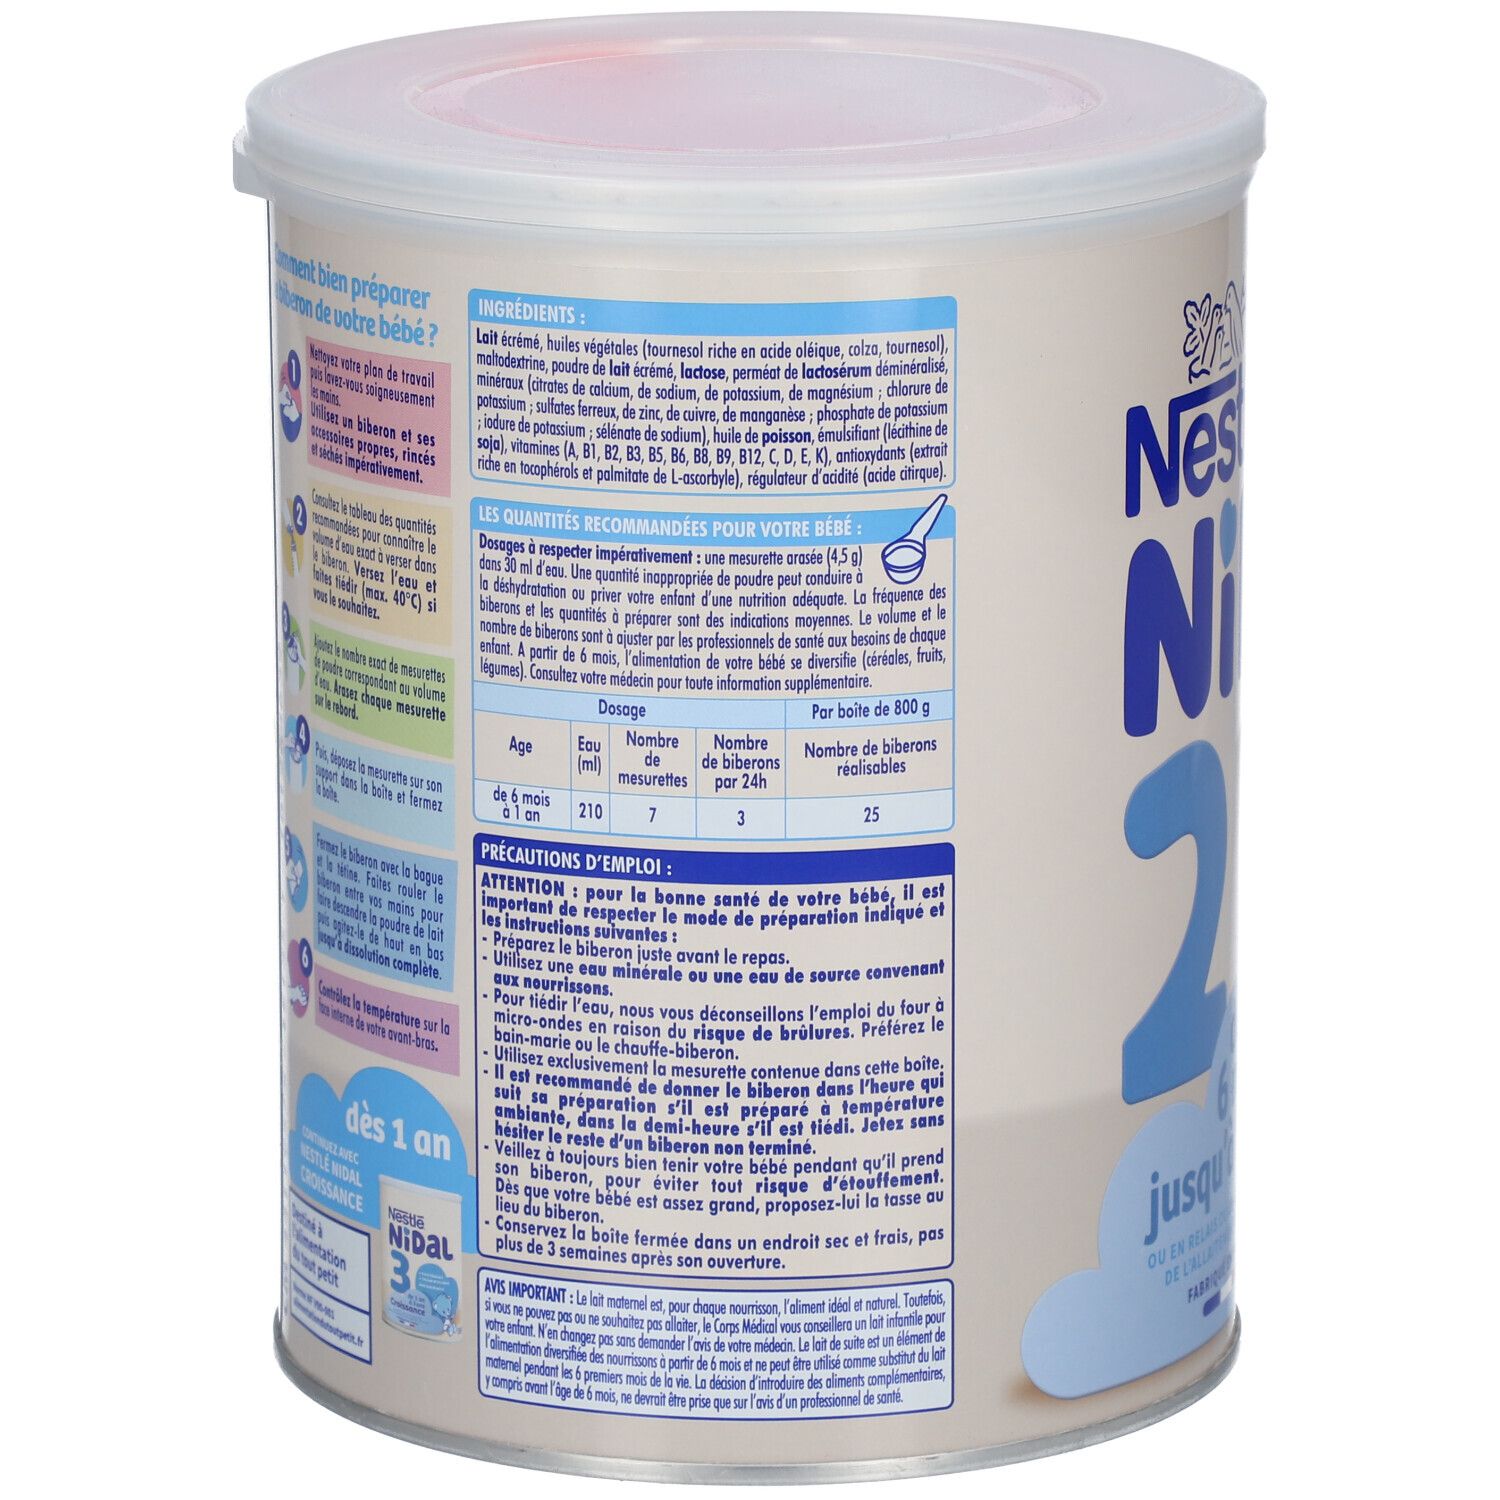 Nestlé® Nidal® 2